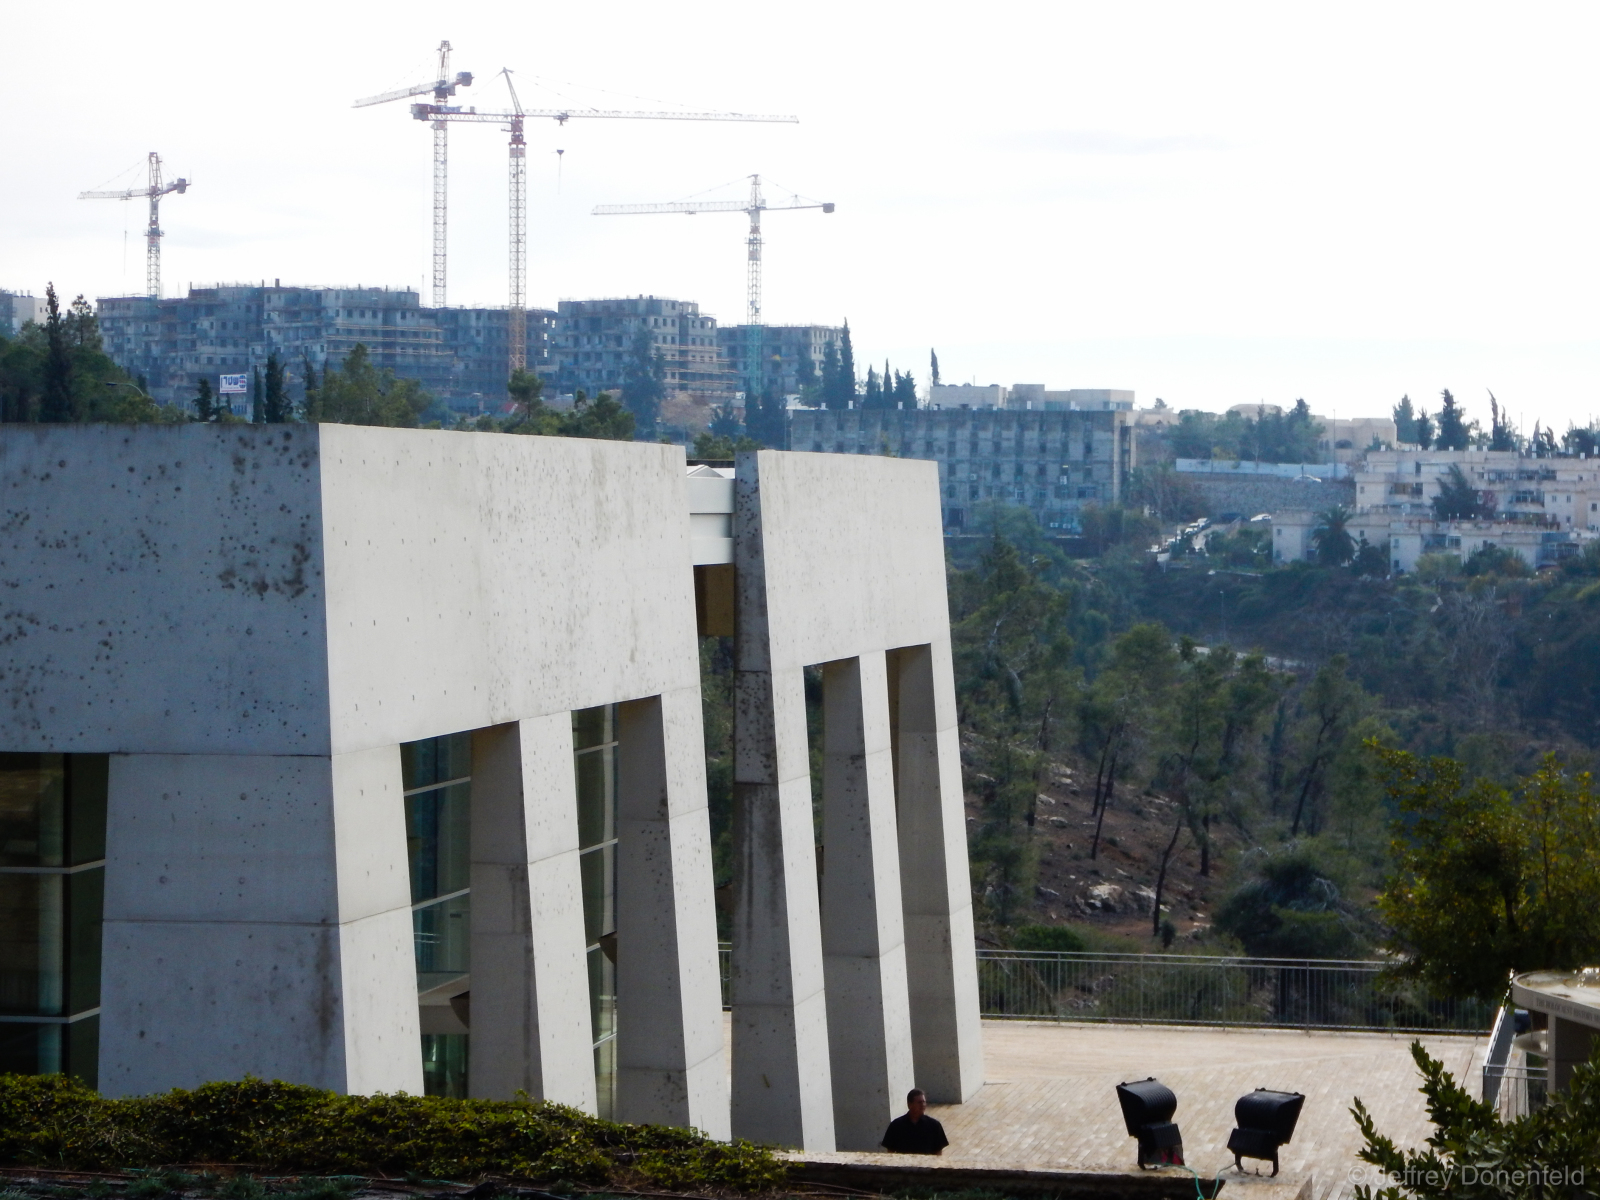 Construction looms closeby the holocaust memorial, Yad Vashem.